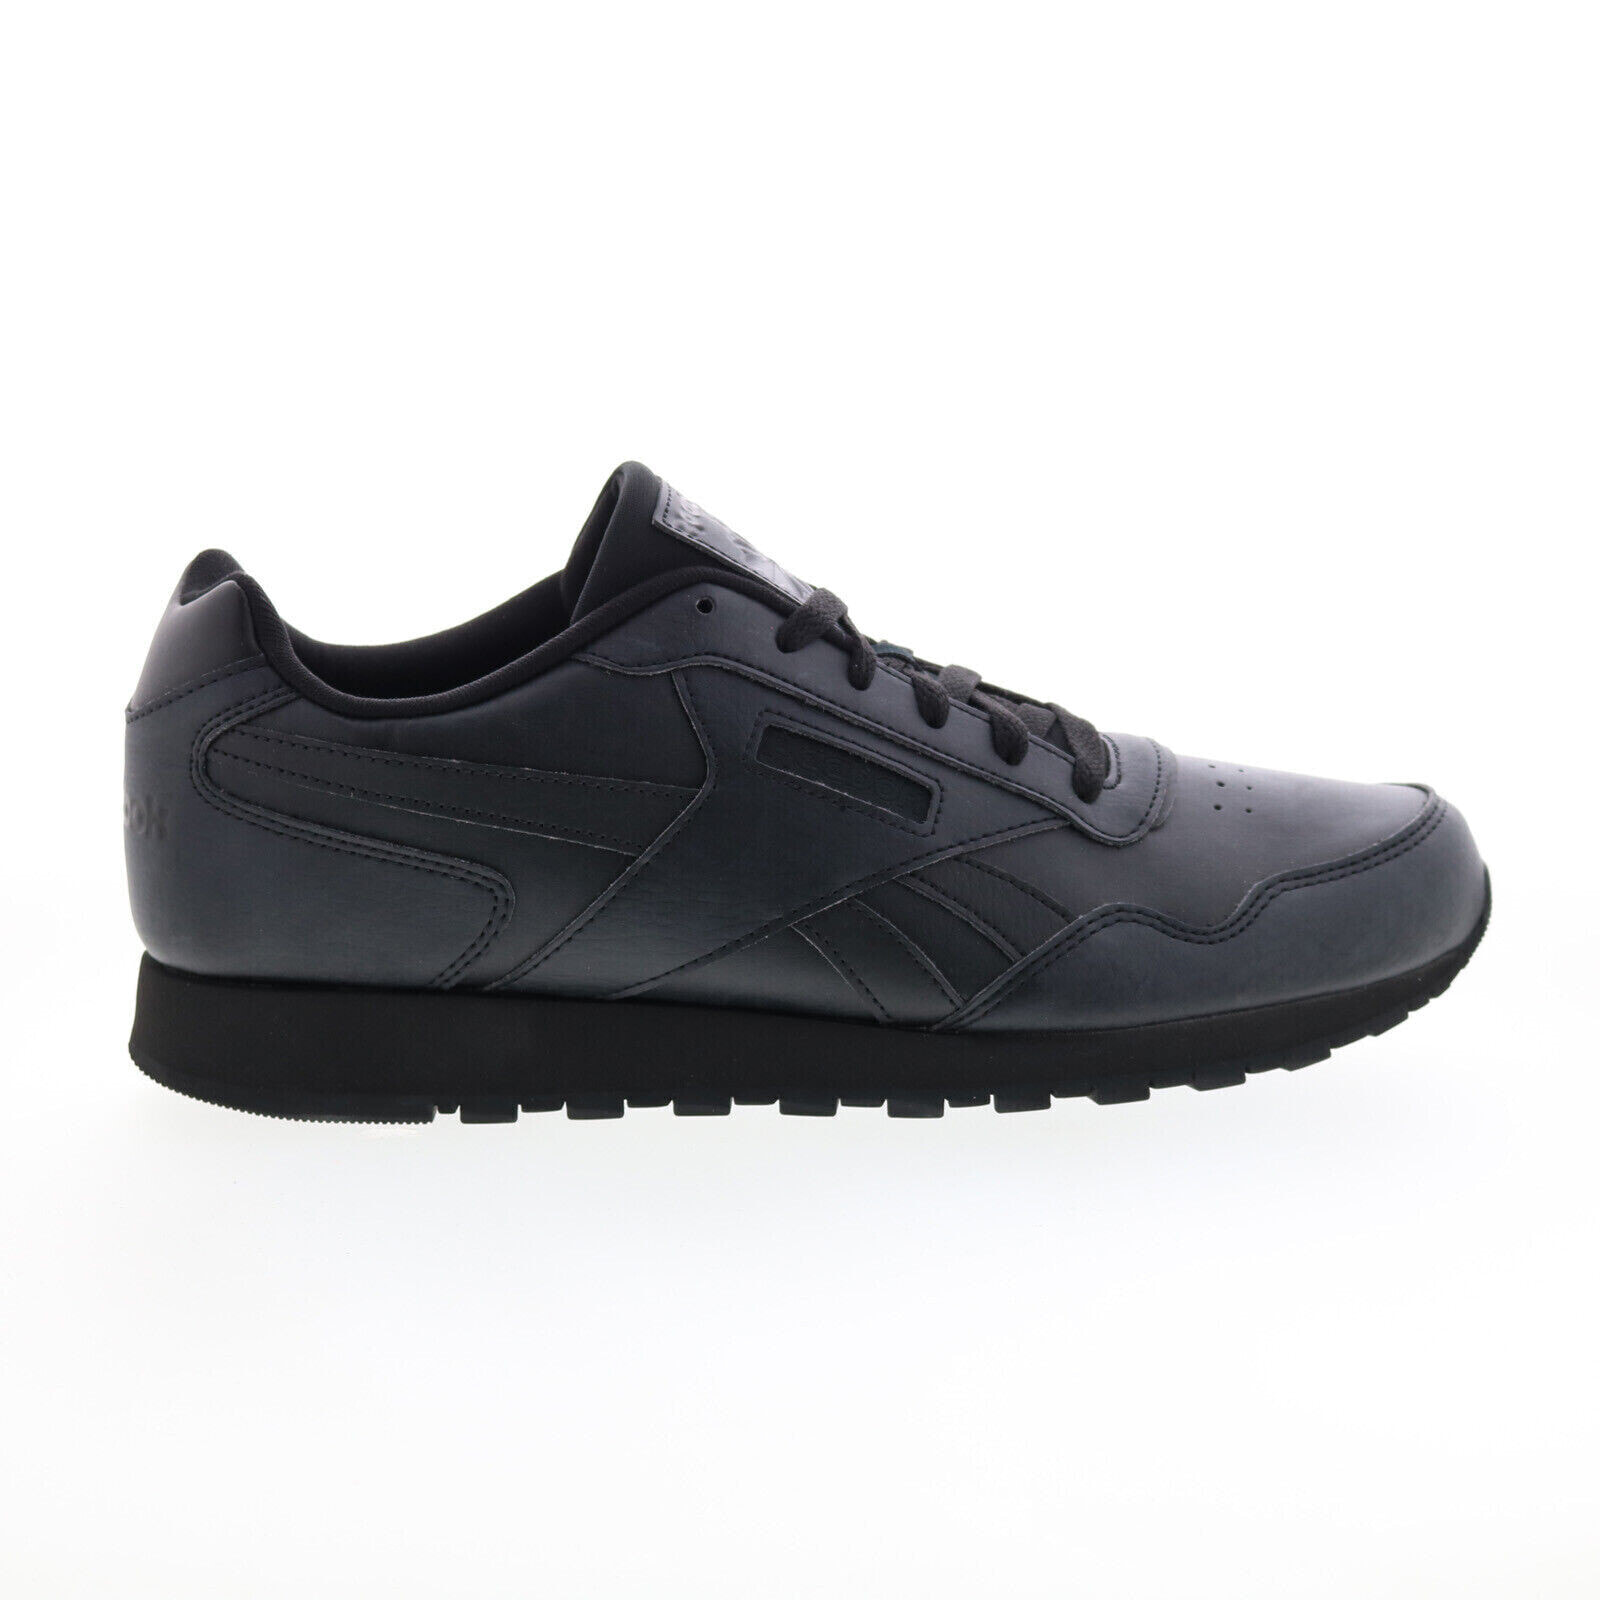 Reebok Classic Harman Run Mens Black Leather Lifestyle Sneakers Shoes